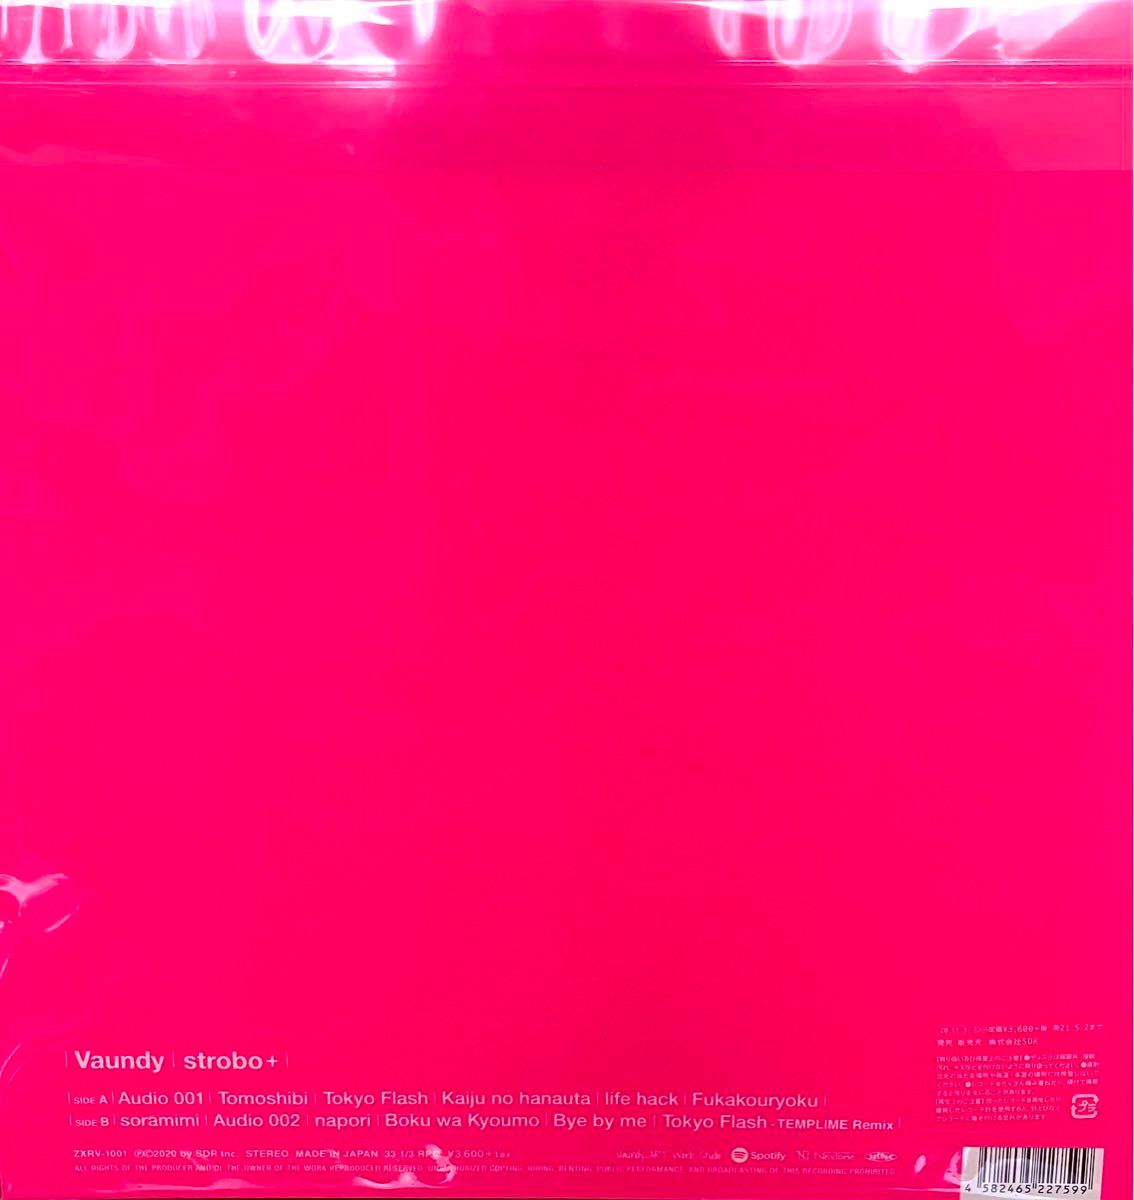 Vaundy strobo+ ZXRV1001 レコード  LP アナログ バウンディ アナログ盤 LPレコード